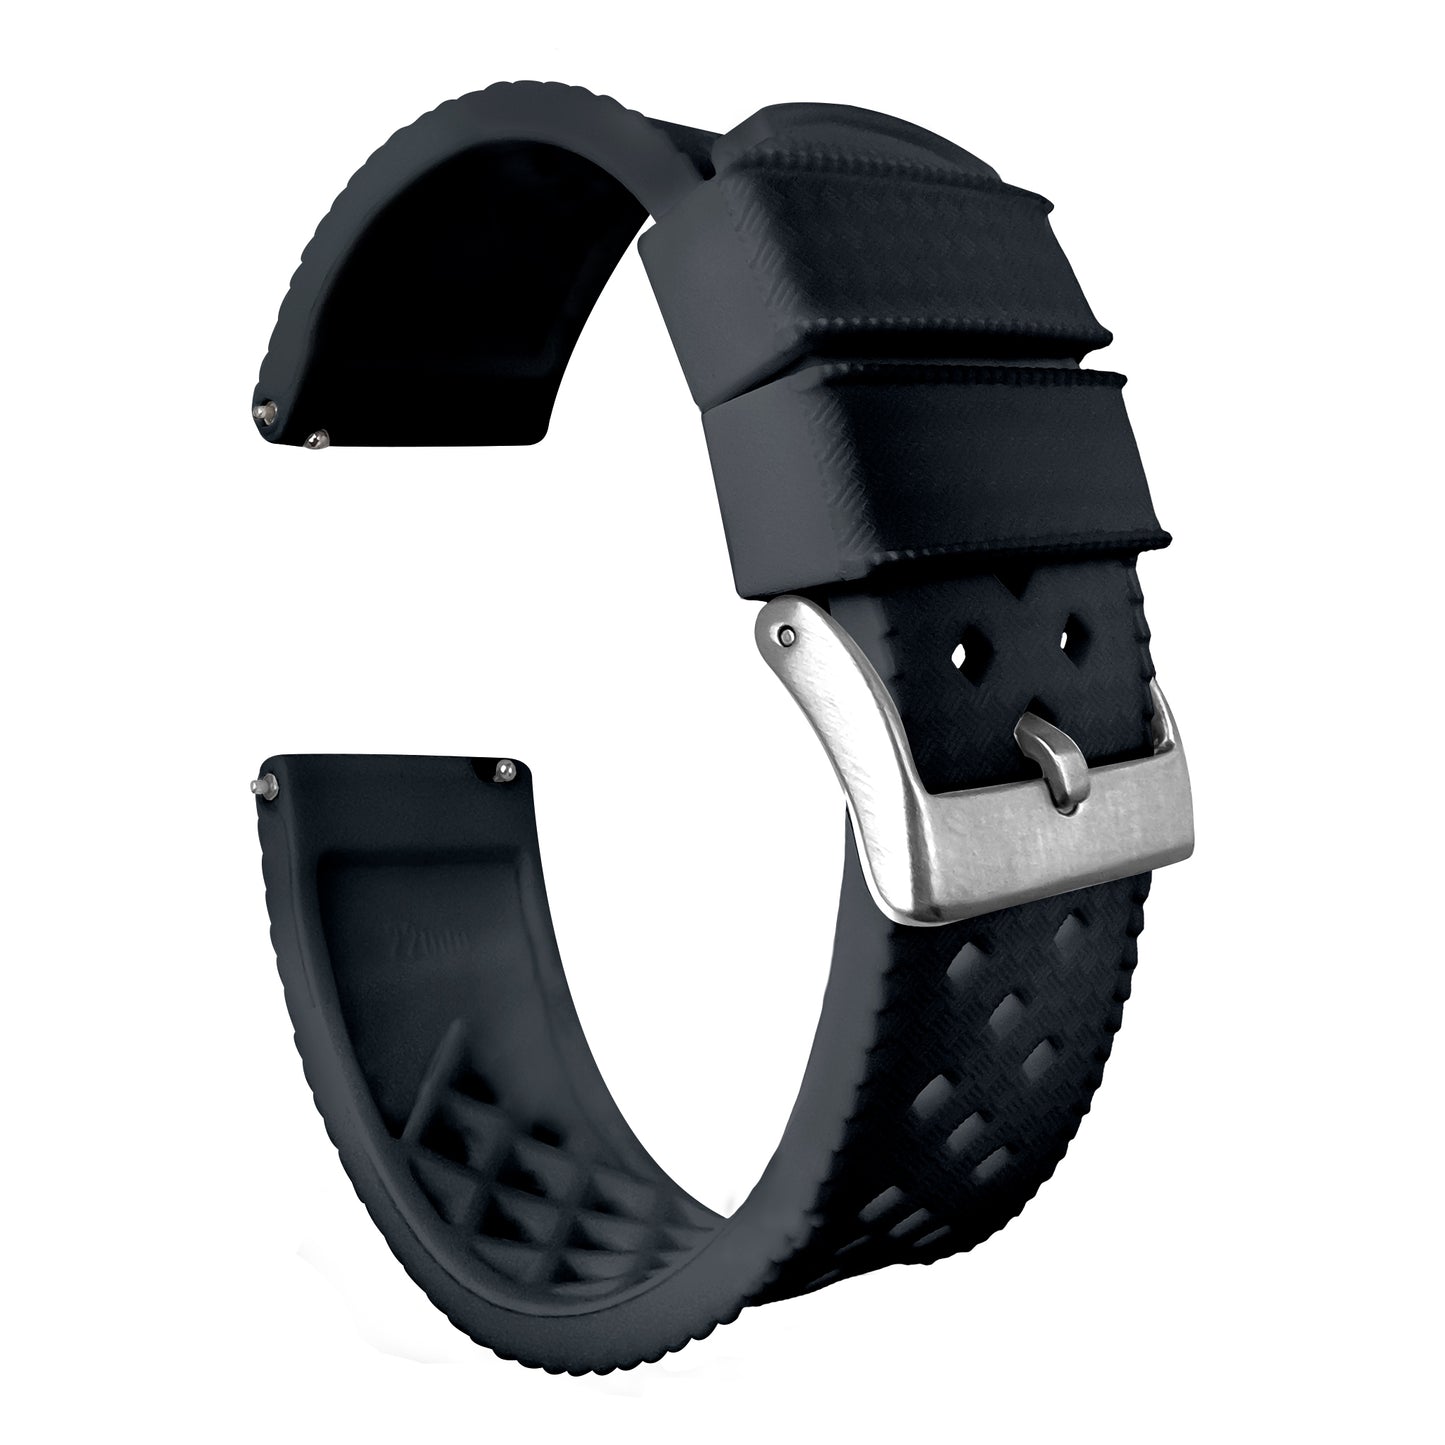 Samsung Galaxy Watch3 Tropical Style Black Watch Band